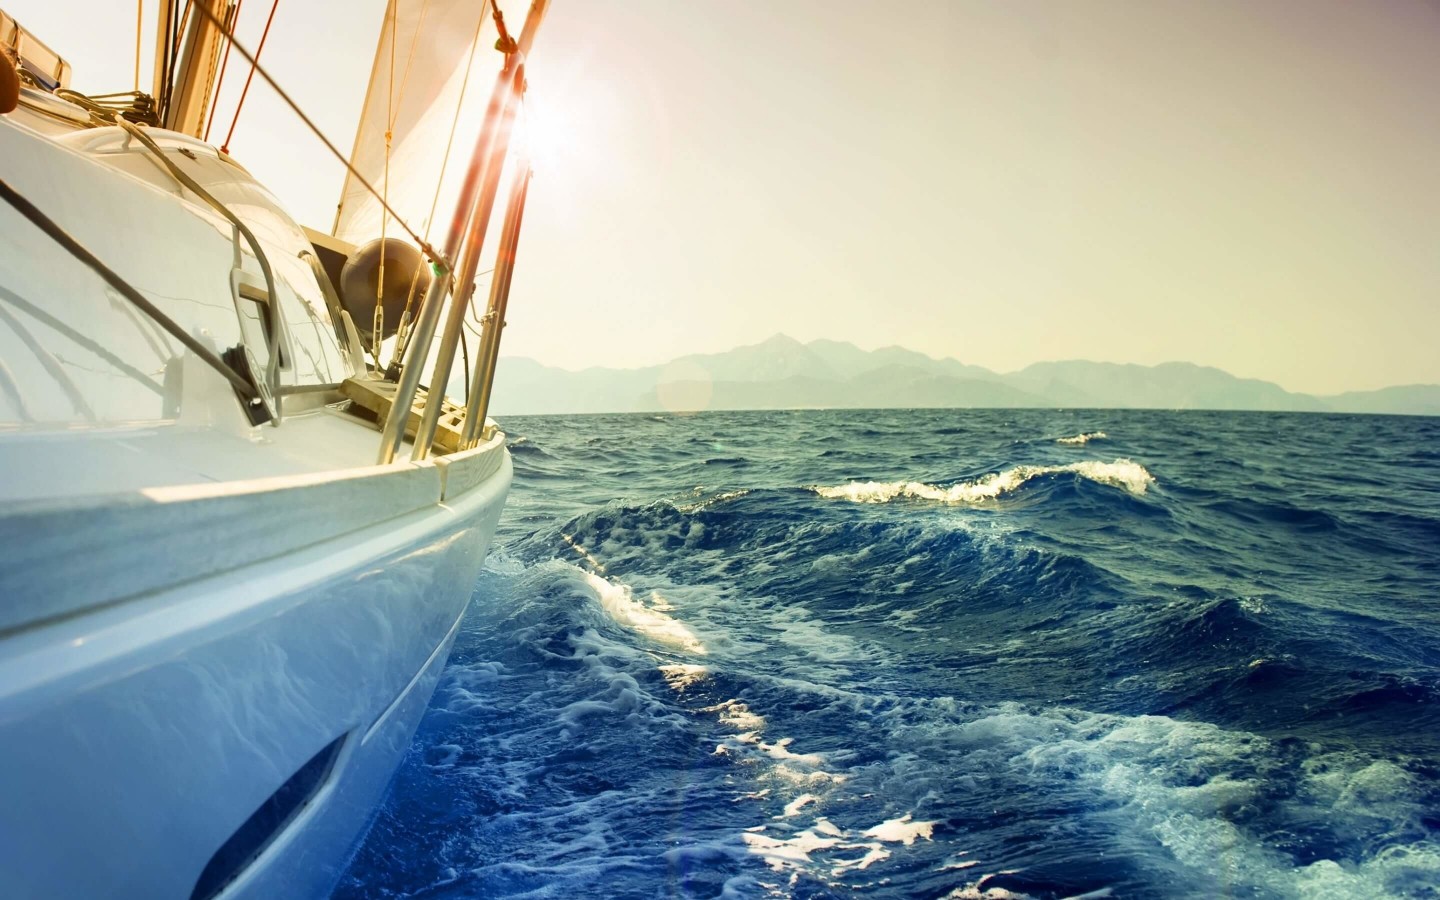 Yacht Sailing Downwind at Sunset Wallpaper for Desktop 1440x900